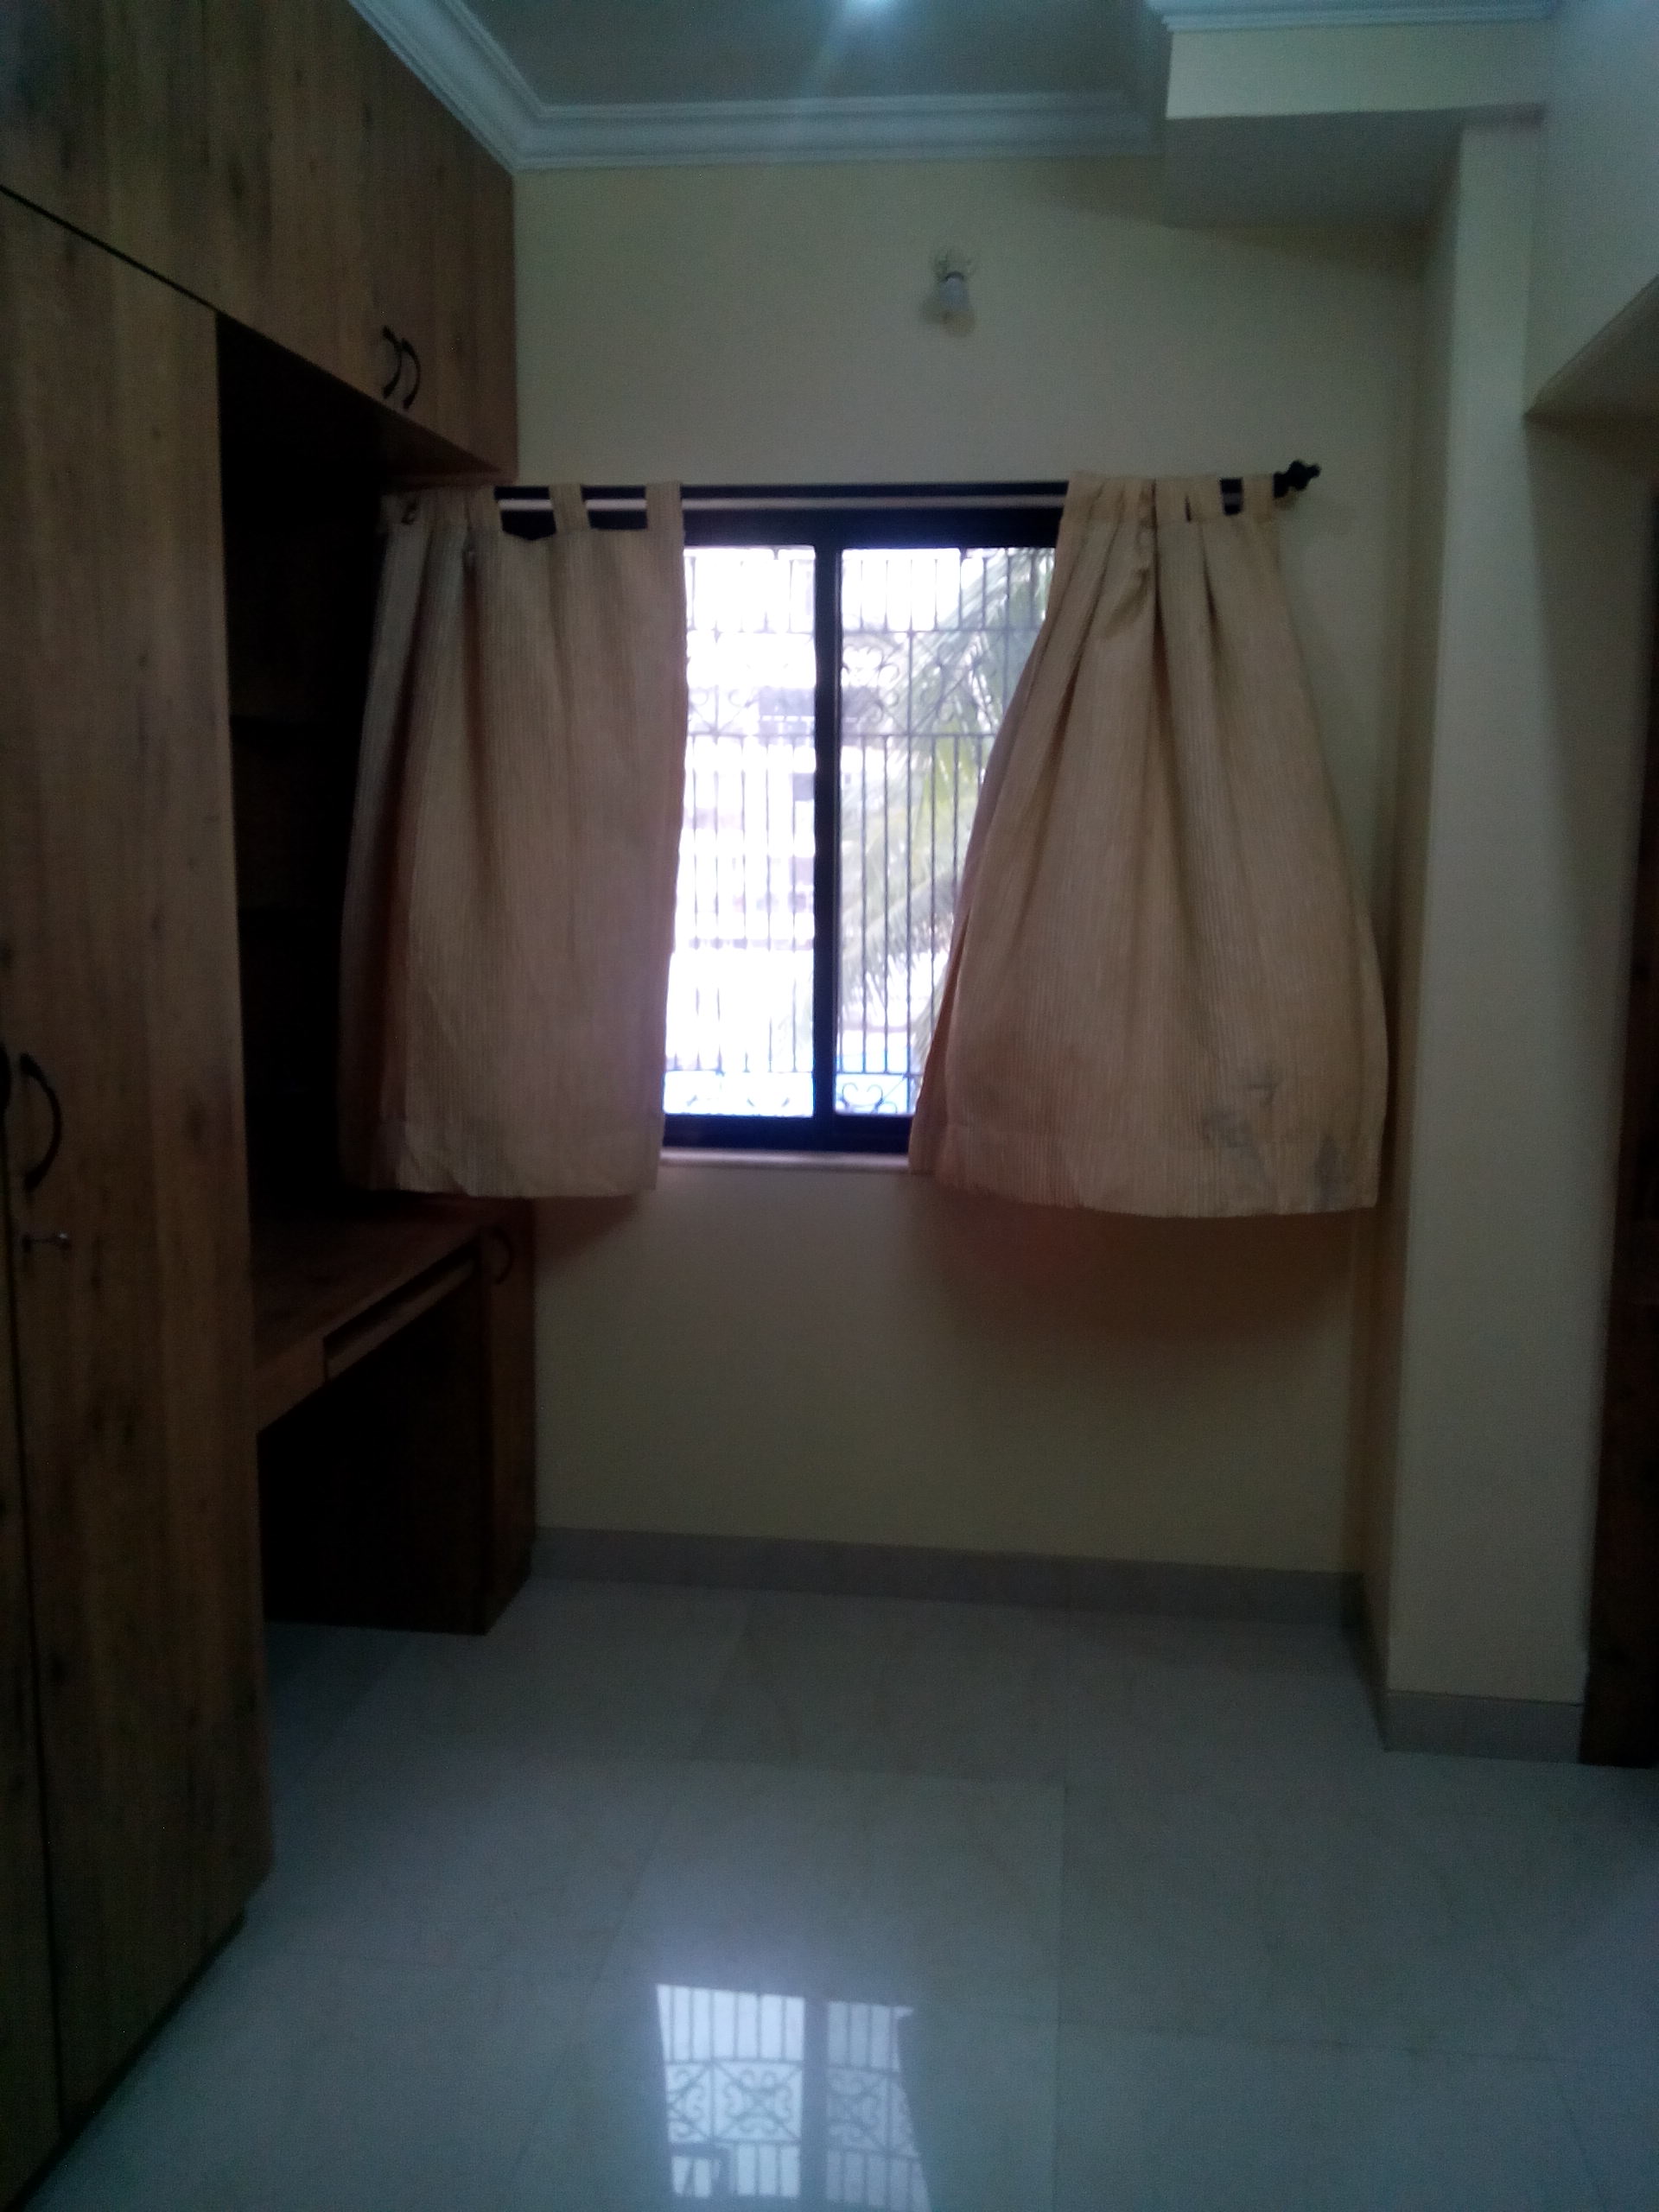 Residential Multistorey Apartment for Rent in 13th Road, Khar West, Mumbai- 400052 , Khar Road-West, Mumbai